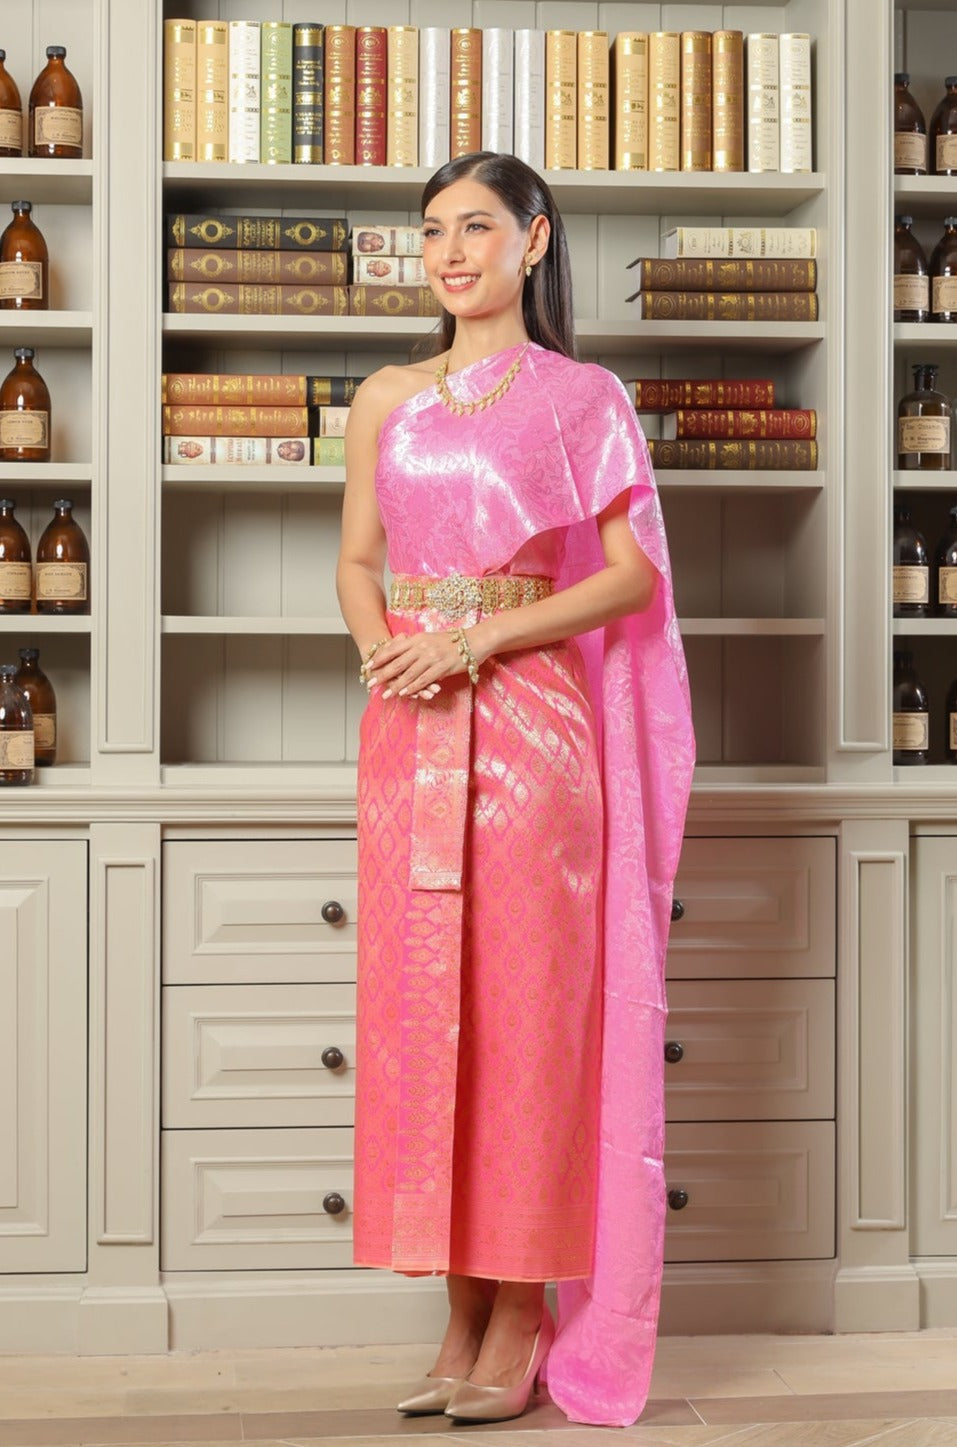 A woman wearing a flirty pink traditional Thai dress.